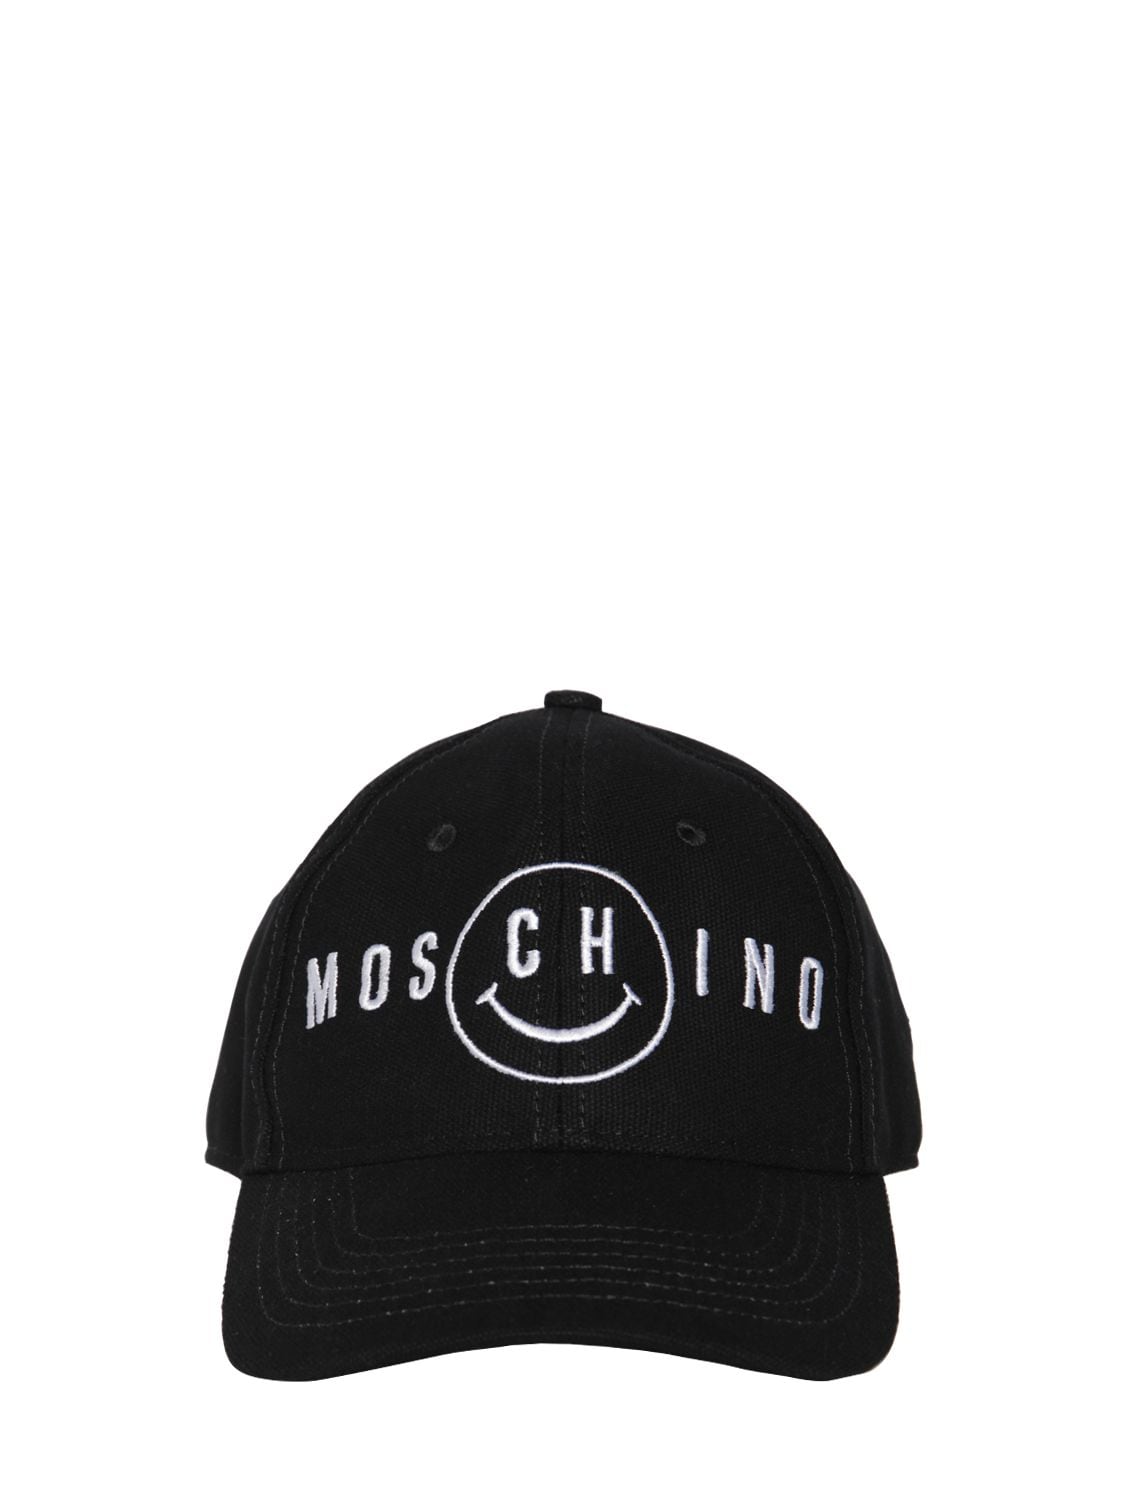 Moschino - Embroidered logo cotton baseball hat - Black/White ...